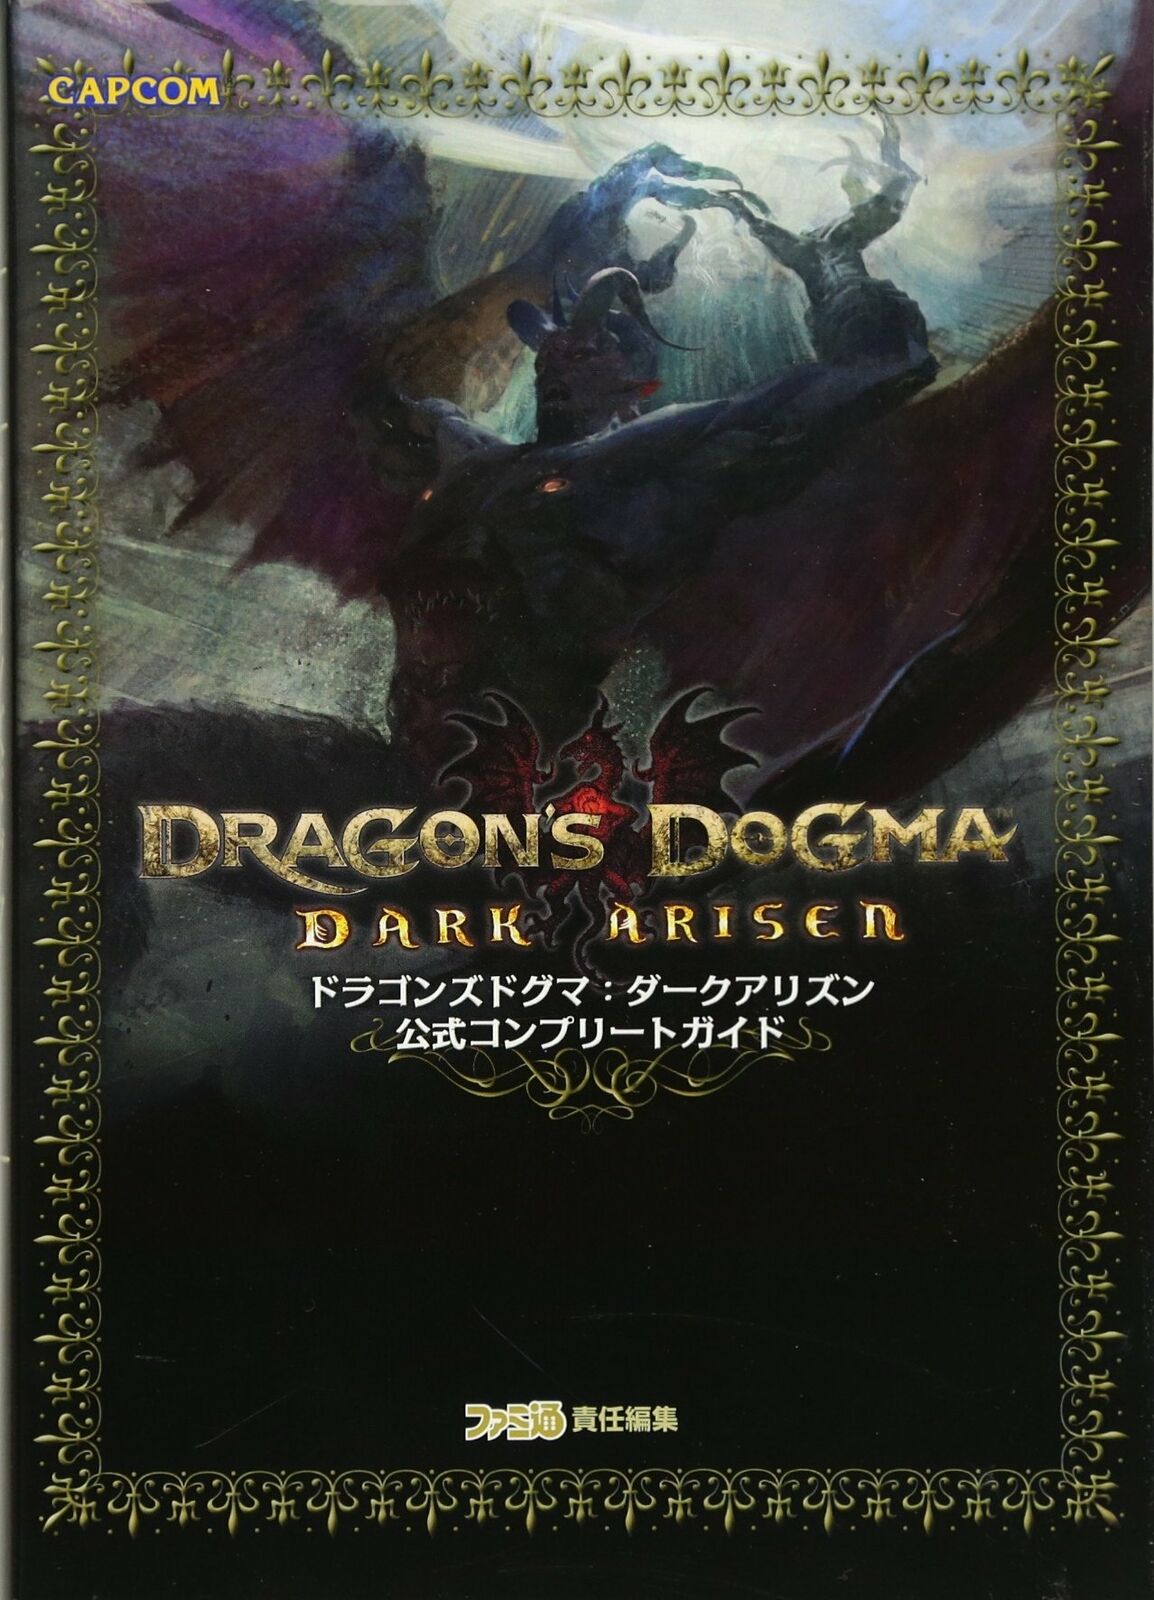 Dragon's Dogma Dark Arisen Official Complete Guide Art work